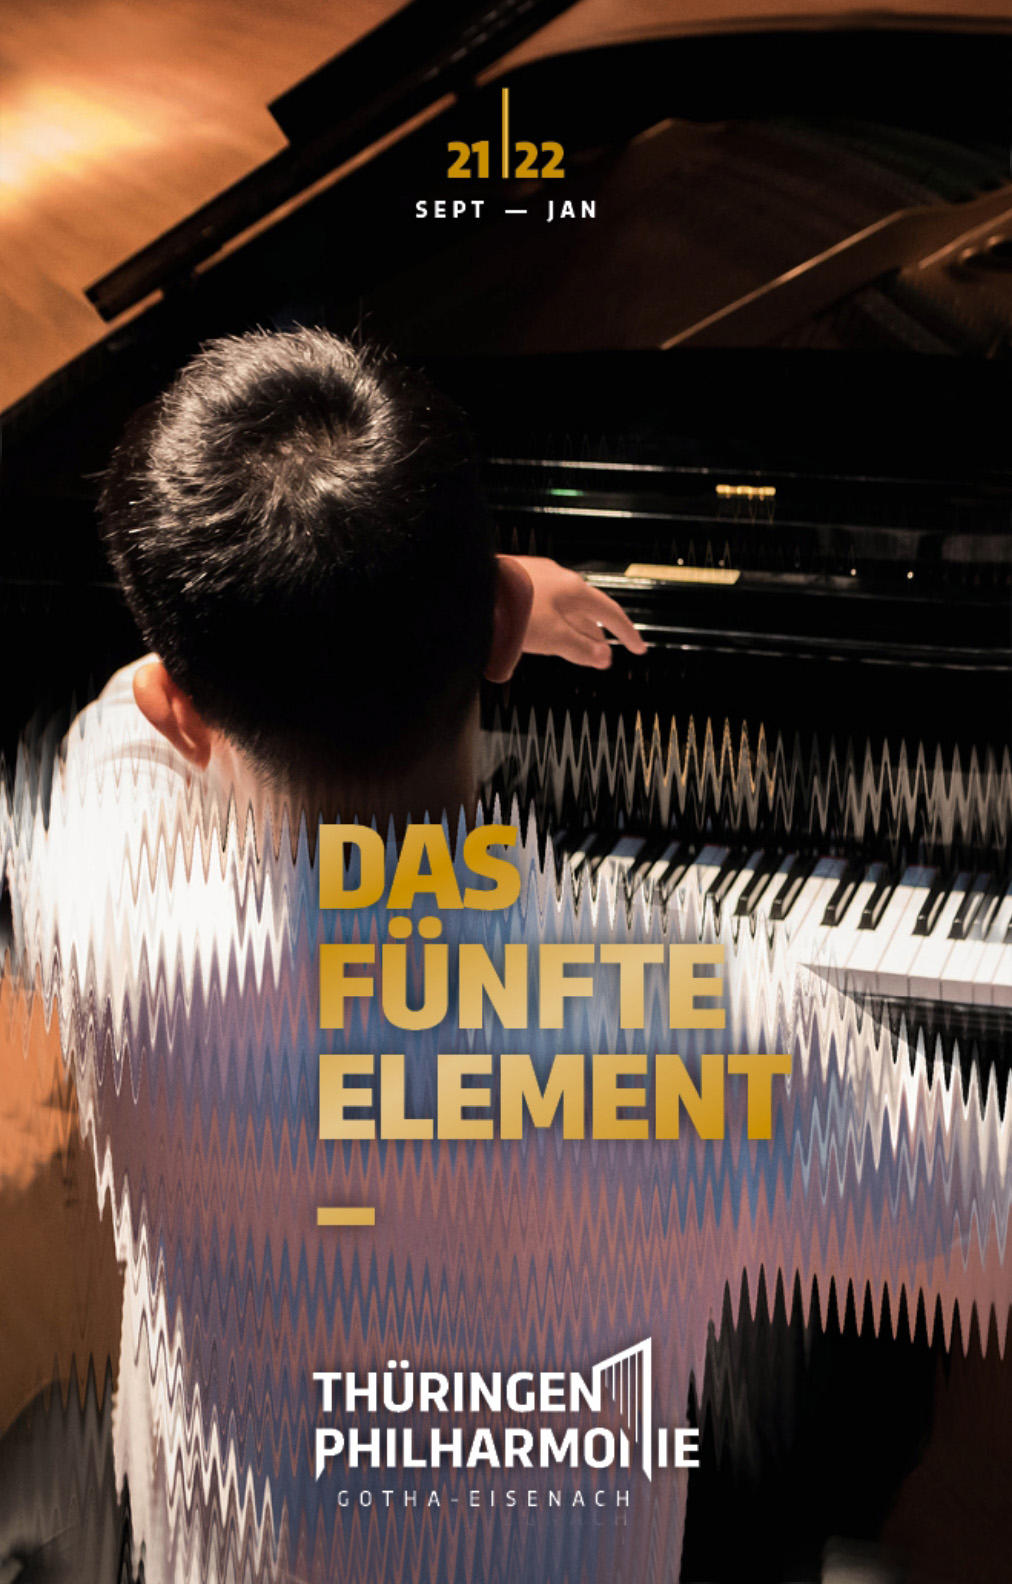 Poster draft visualizing musical vibration: shimmering pianist